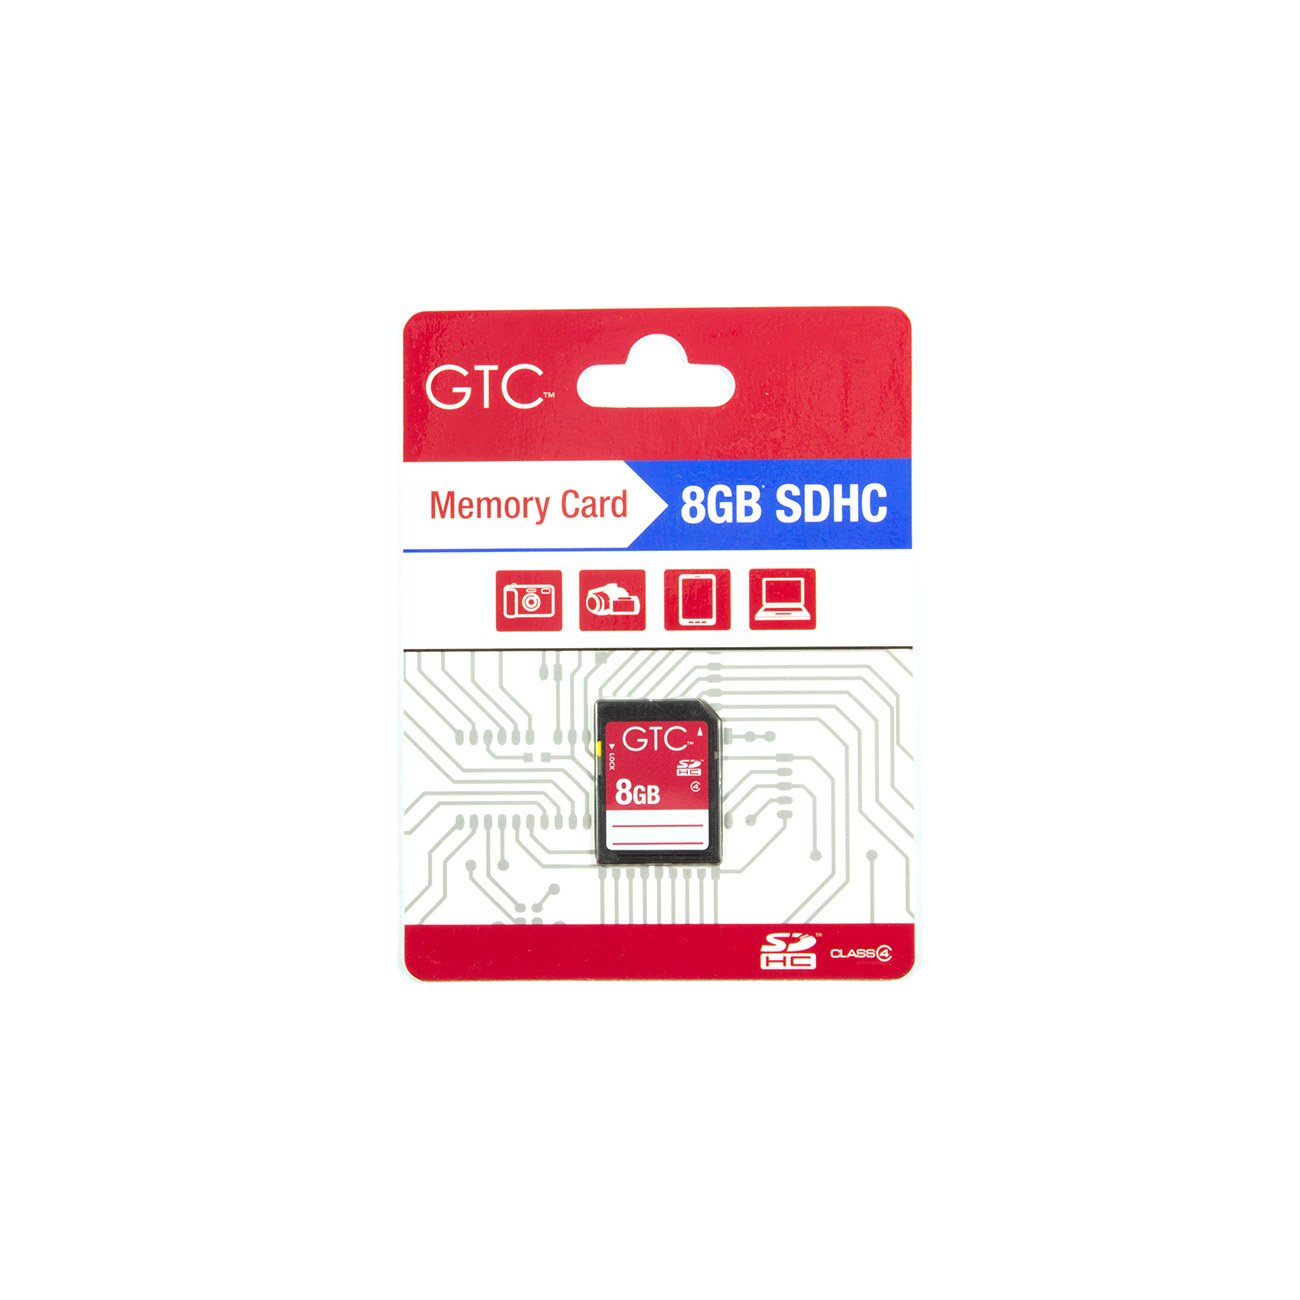 Norcent 8 GB Turbo SDHC Card 